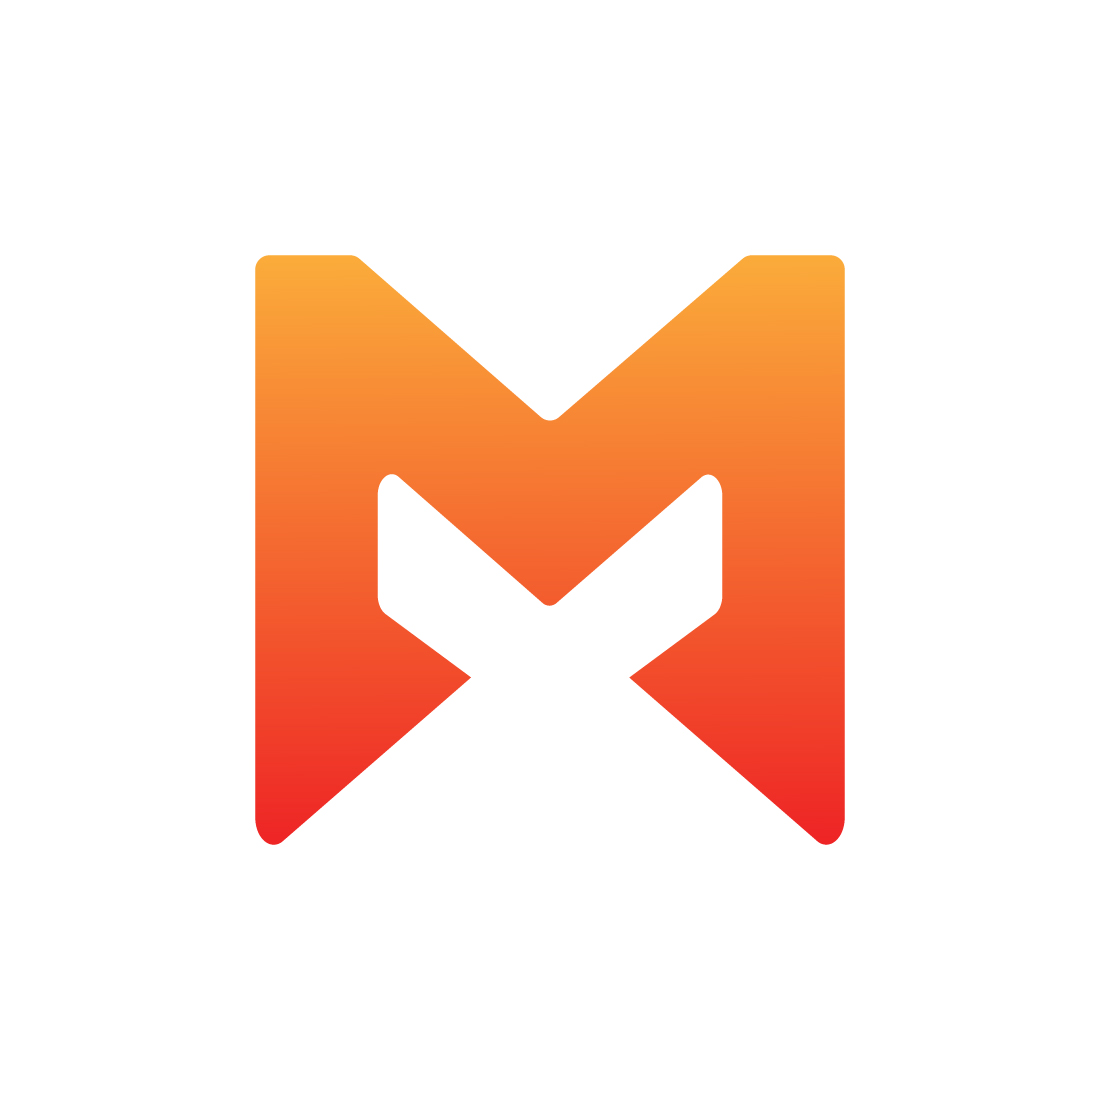 Creative Letter M logo design cover image.